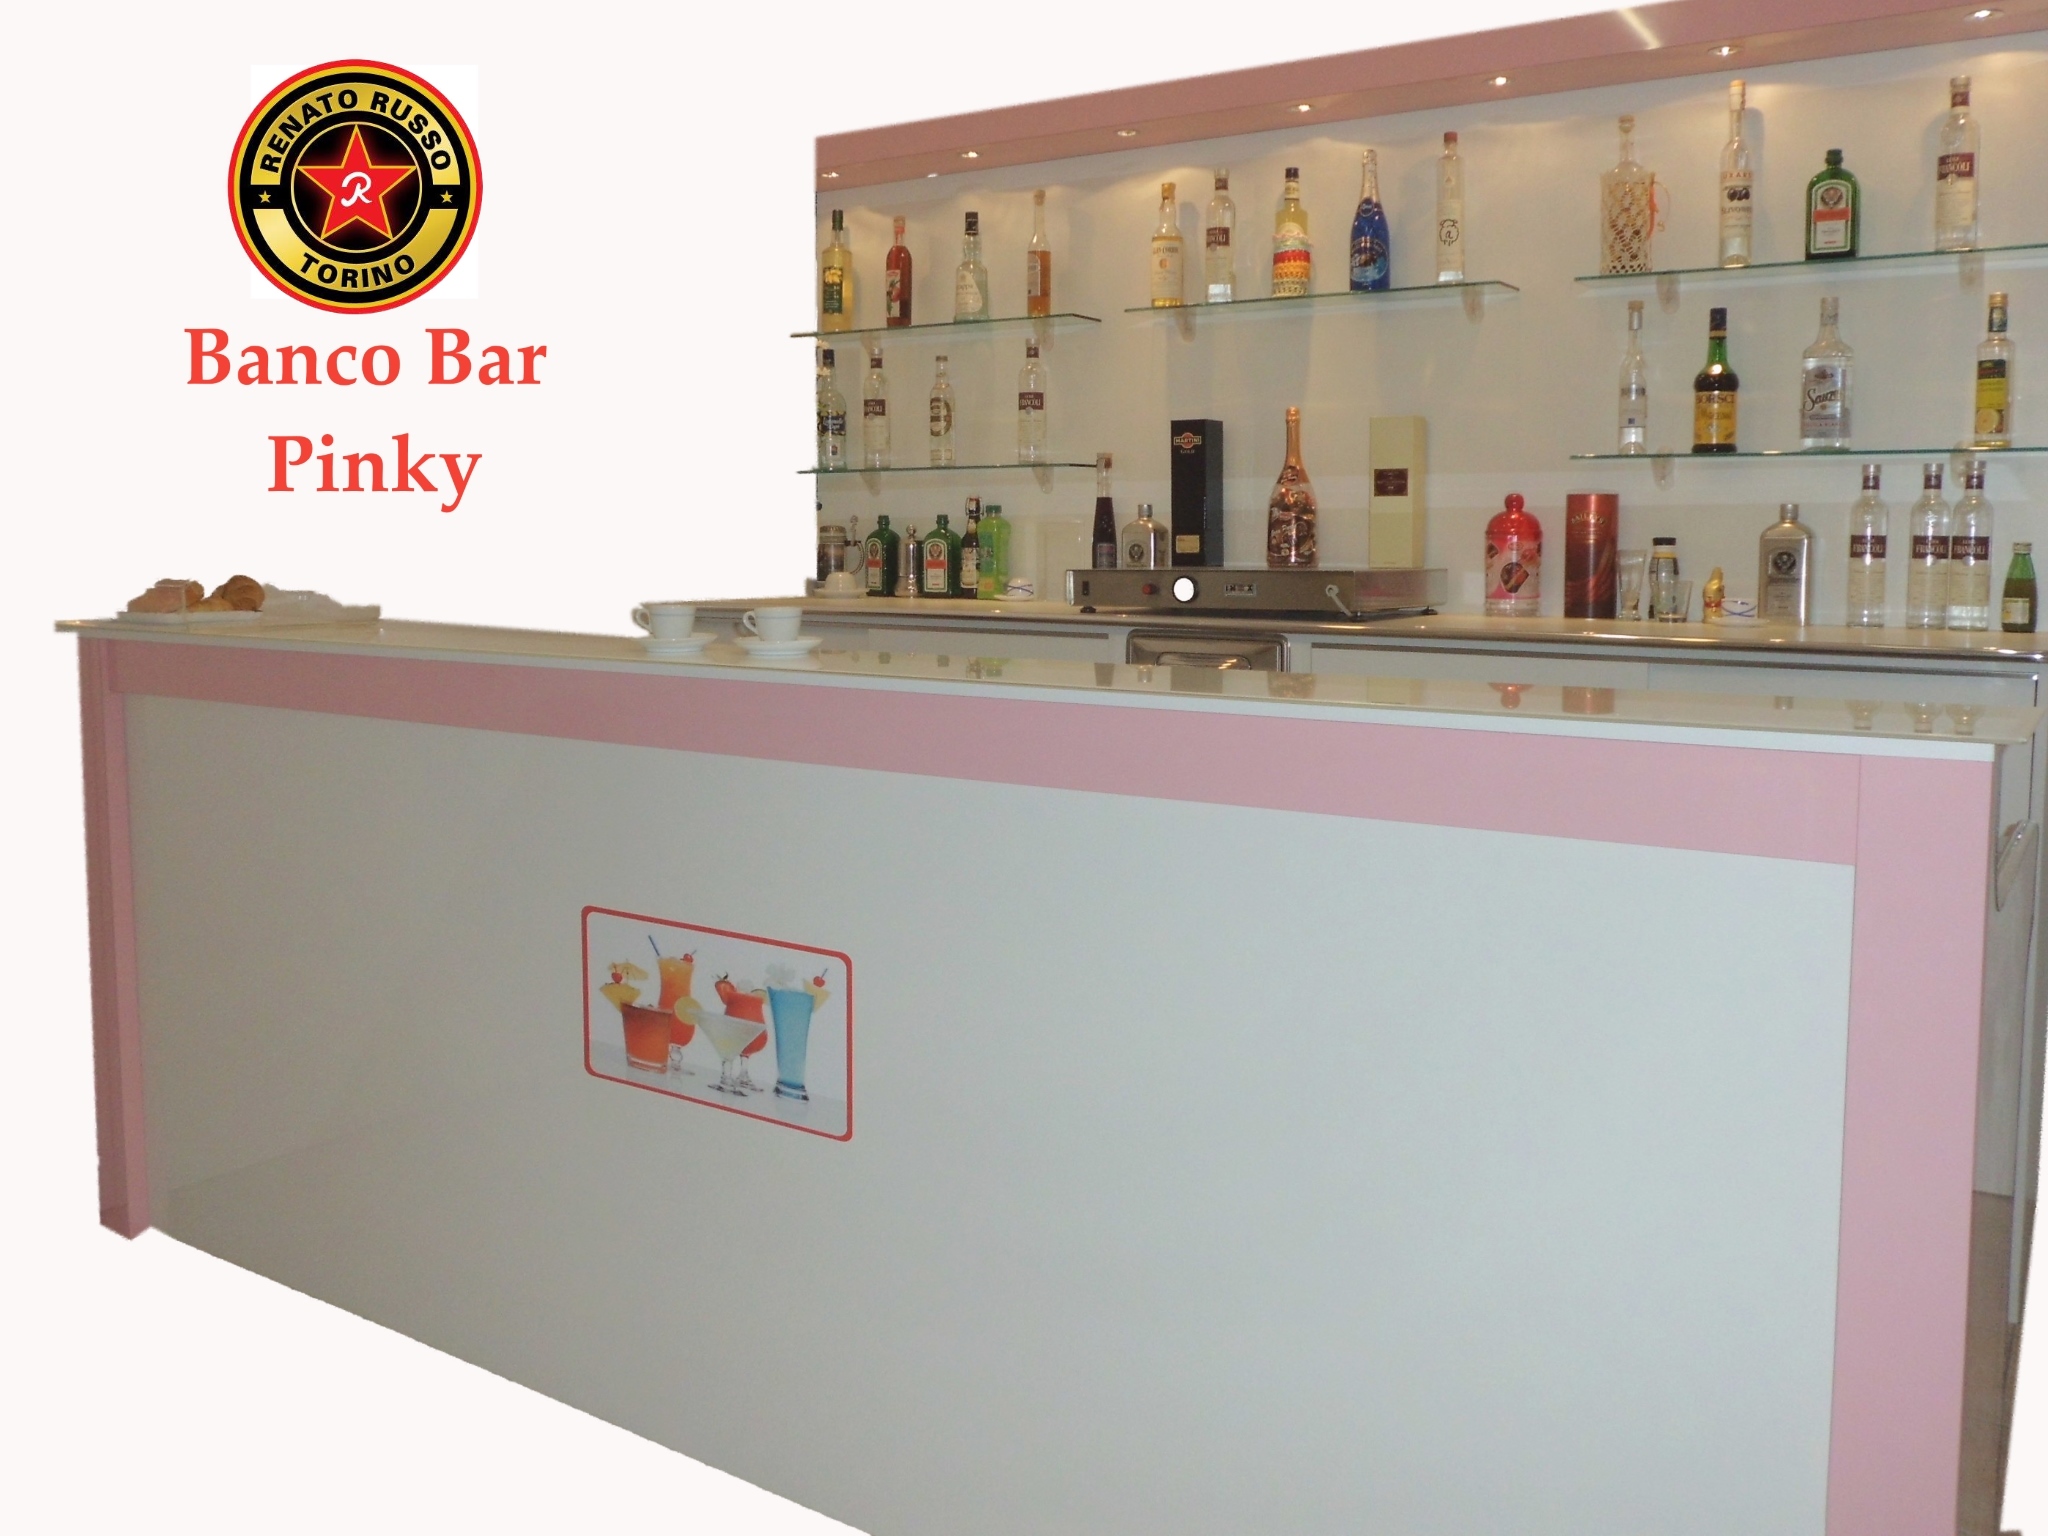 Banconi Bar, Banchi Frigo, Vetrine Refrigerate, Cocktail Station